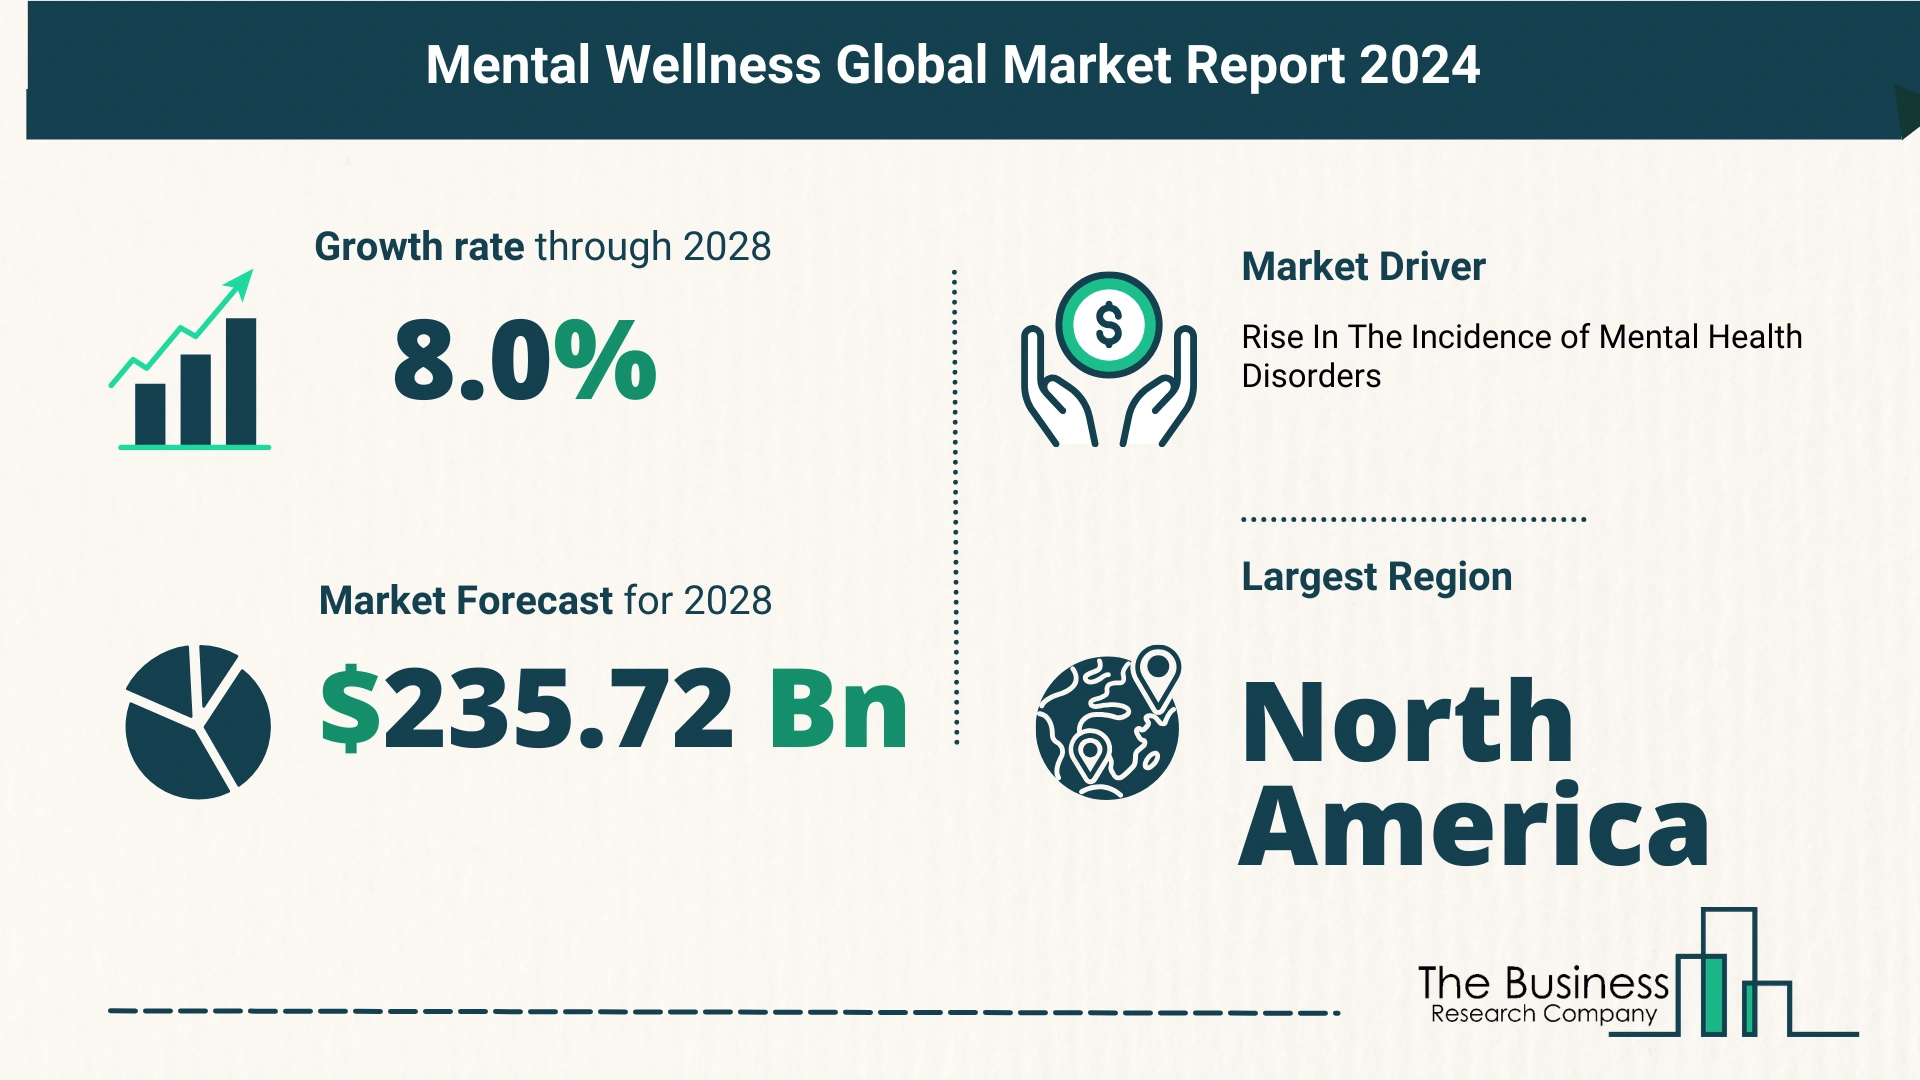 Global Mental Wellness Market